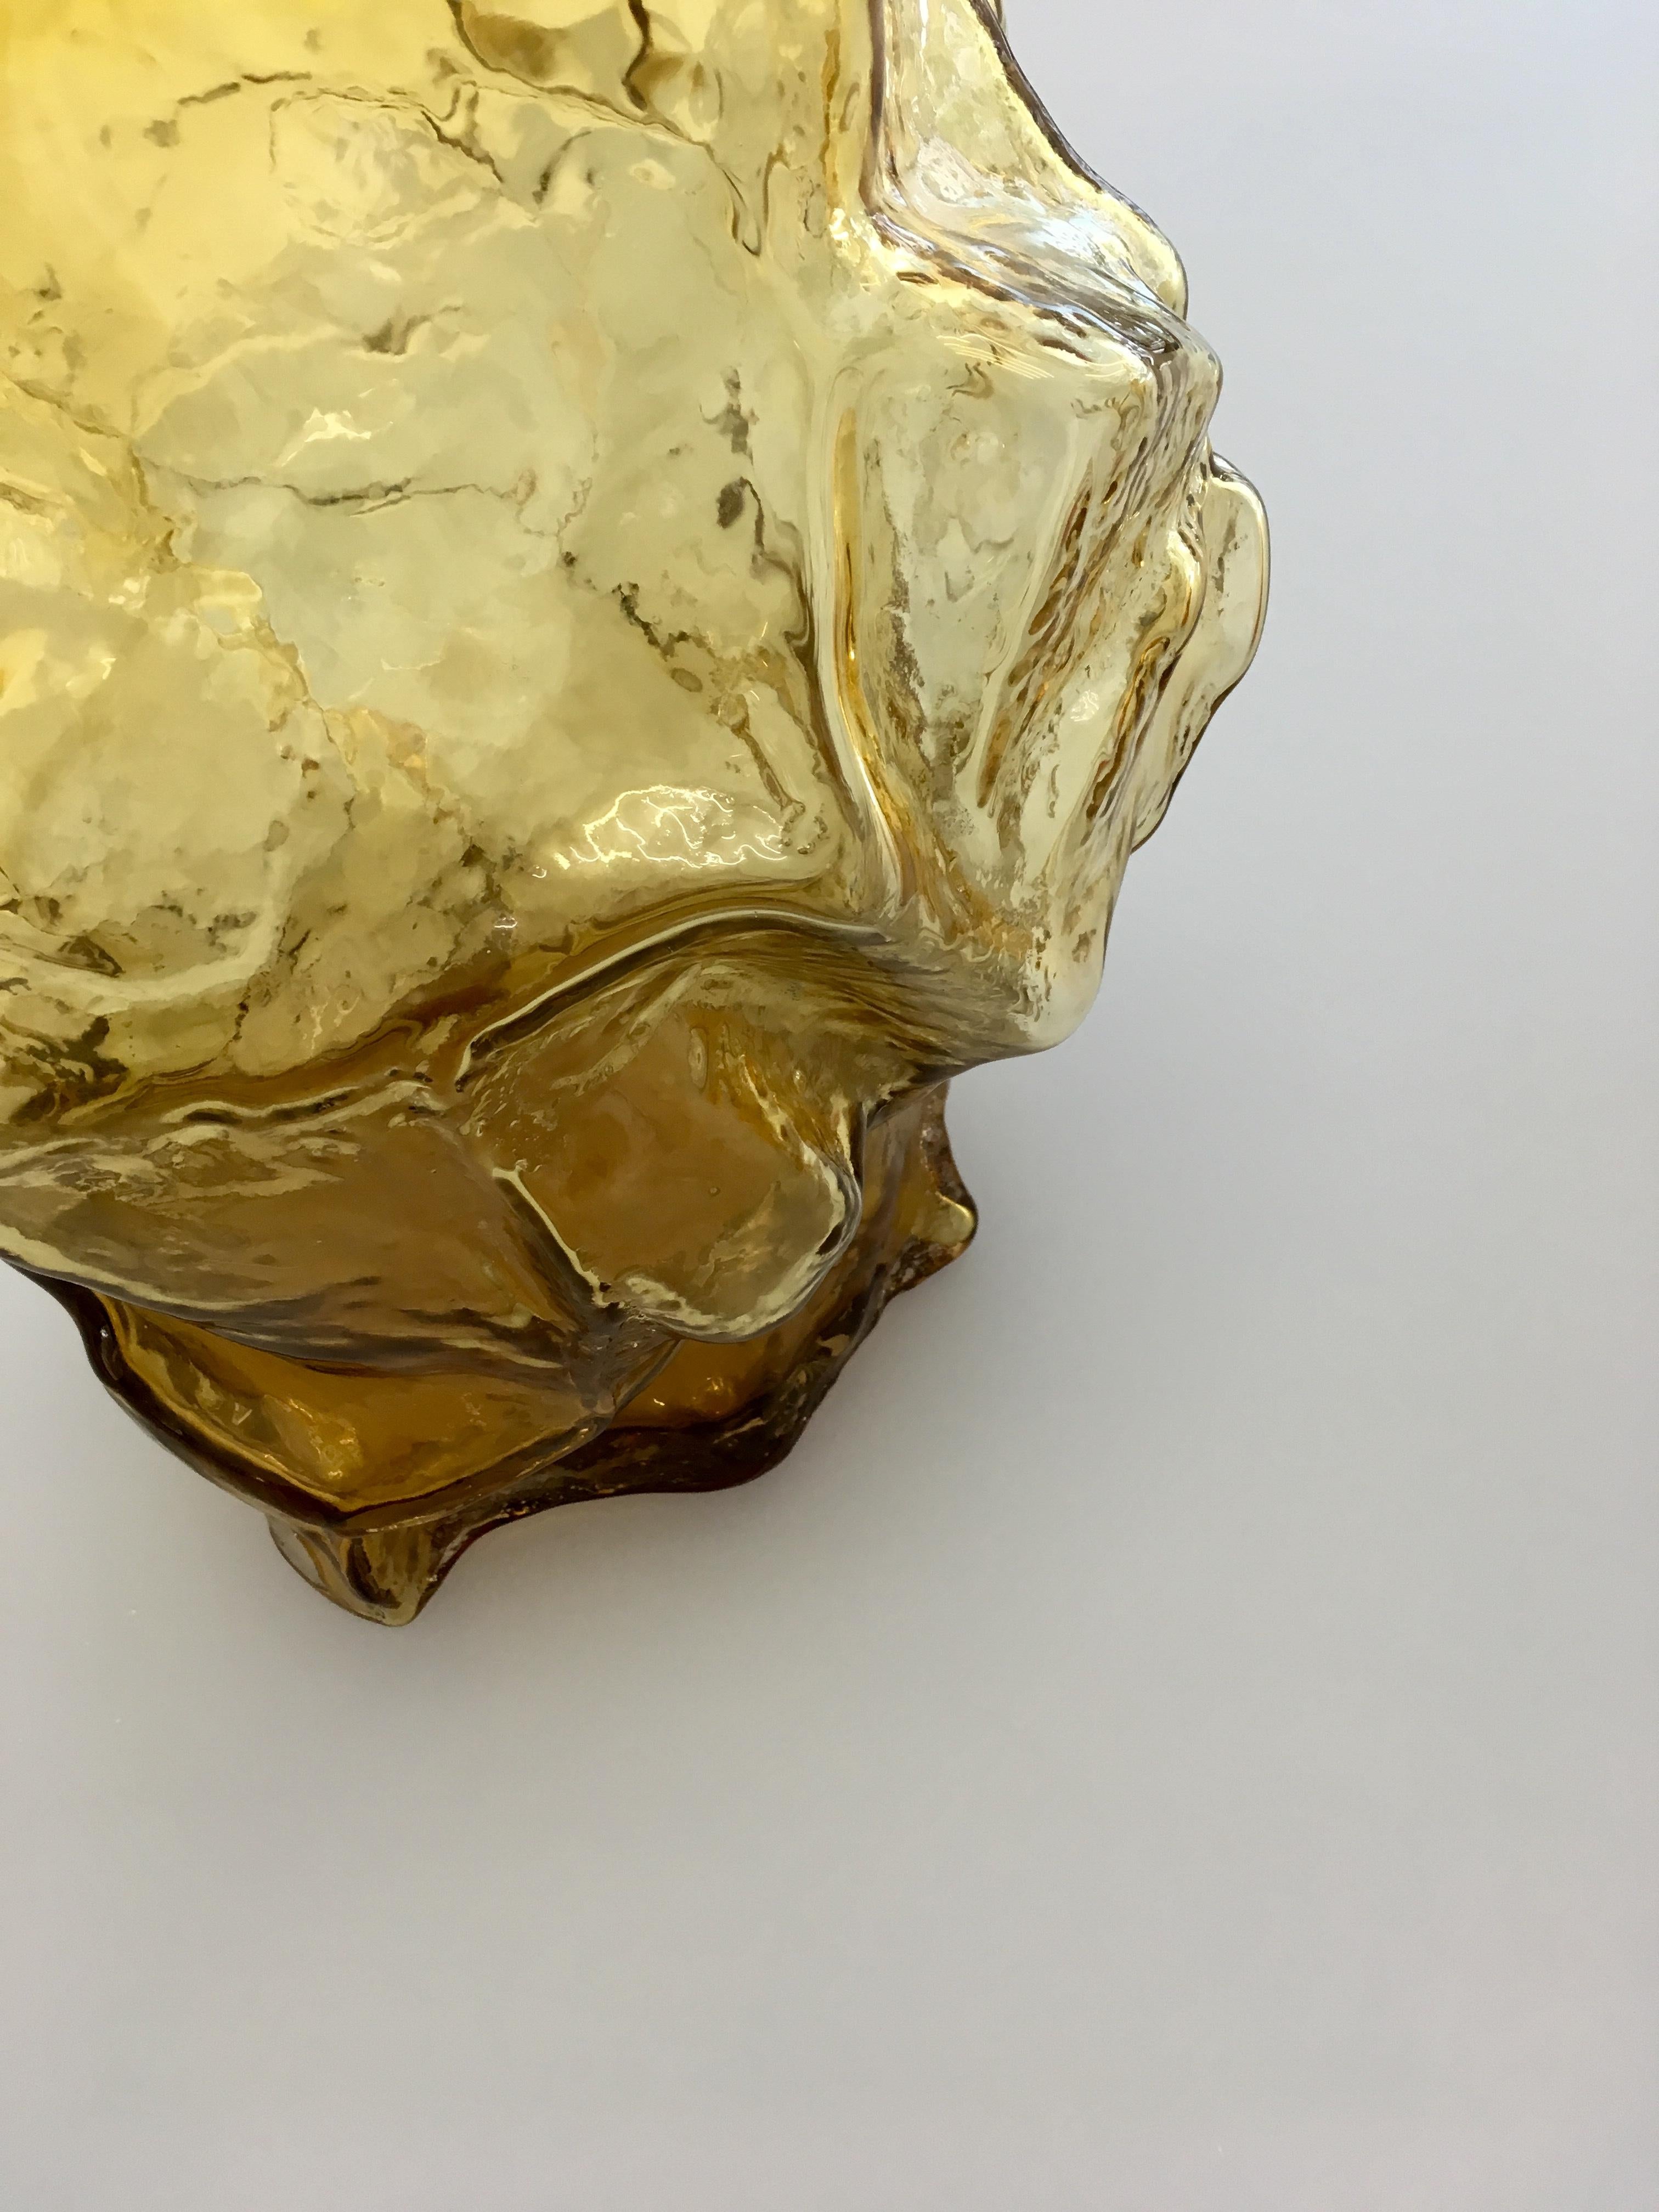 Danish Contemporary Design Unique Glass 'Mountain' Vase by Fos, Cider